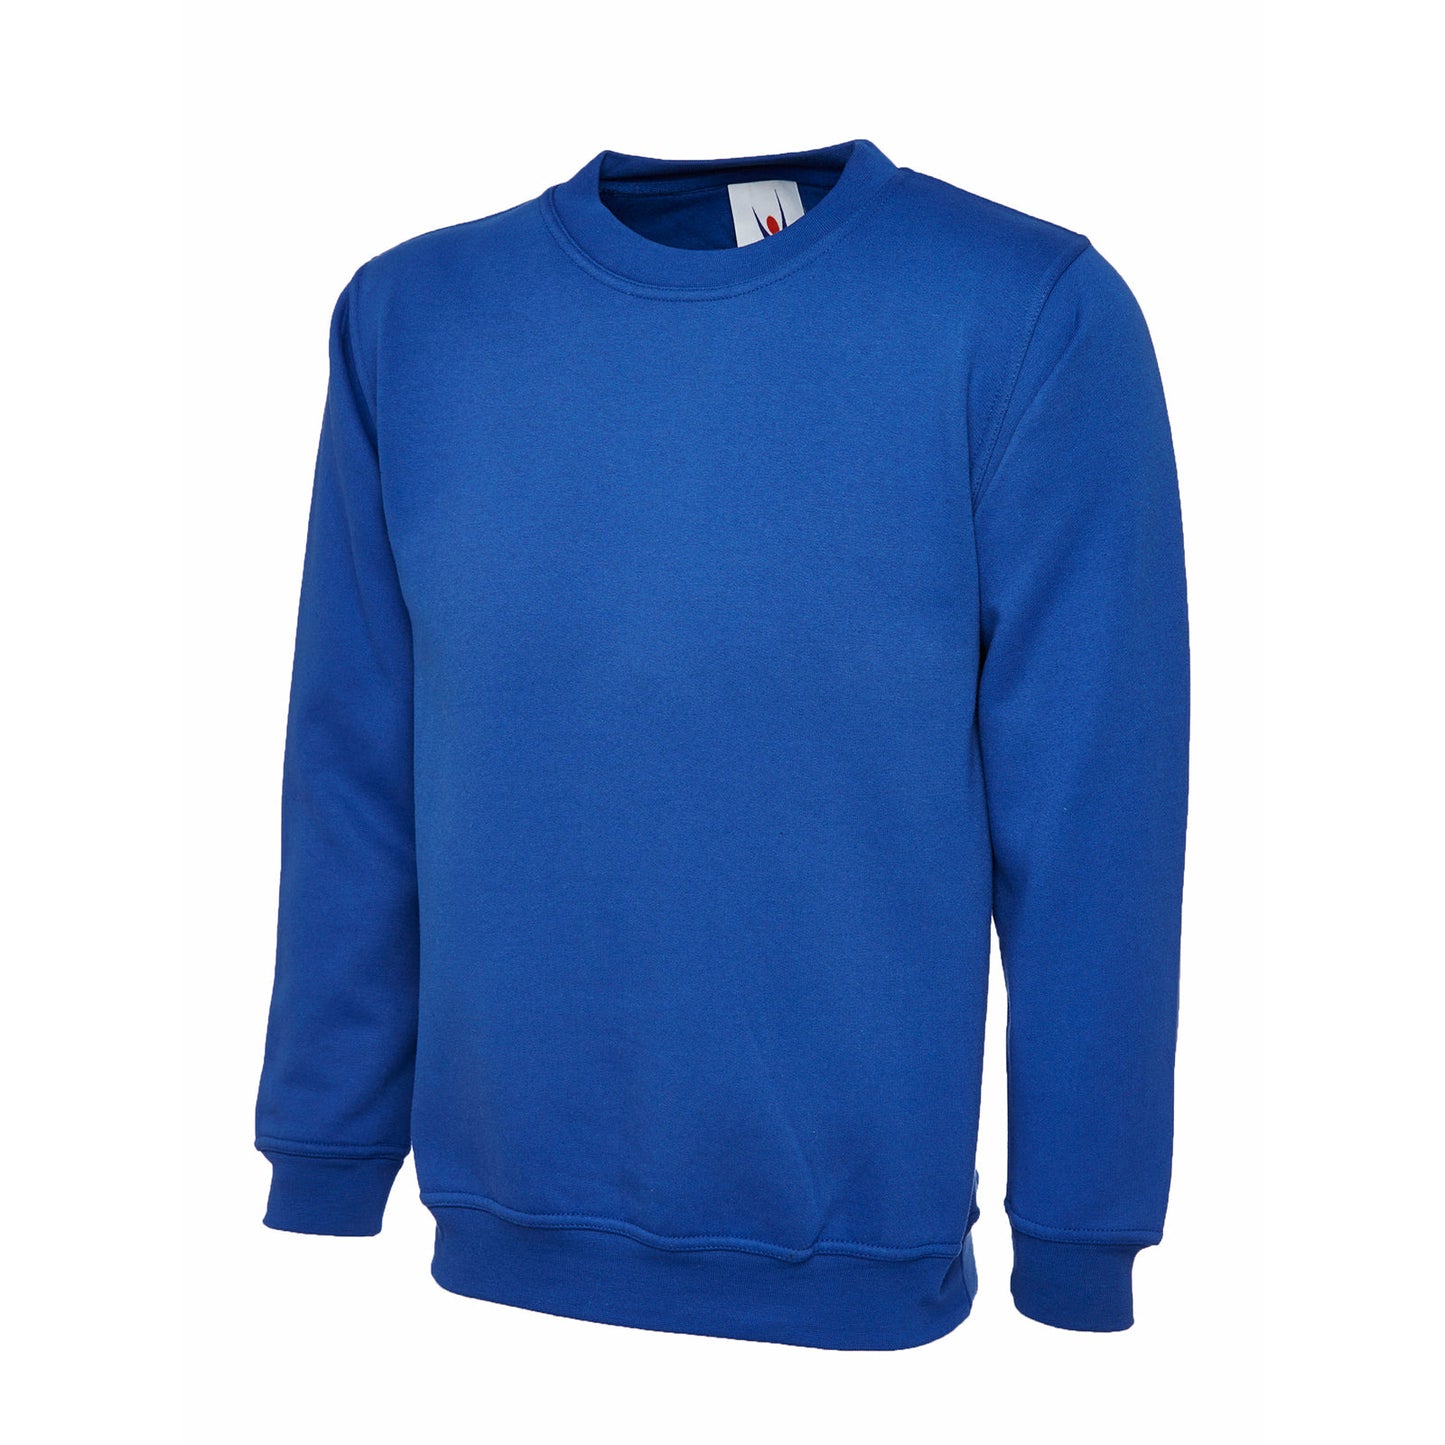 The UX Children's Sweatshirt - Royal Blue